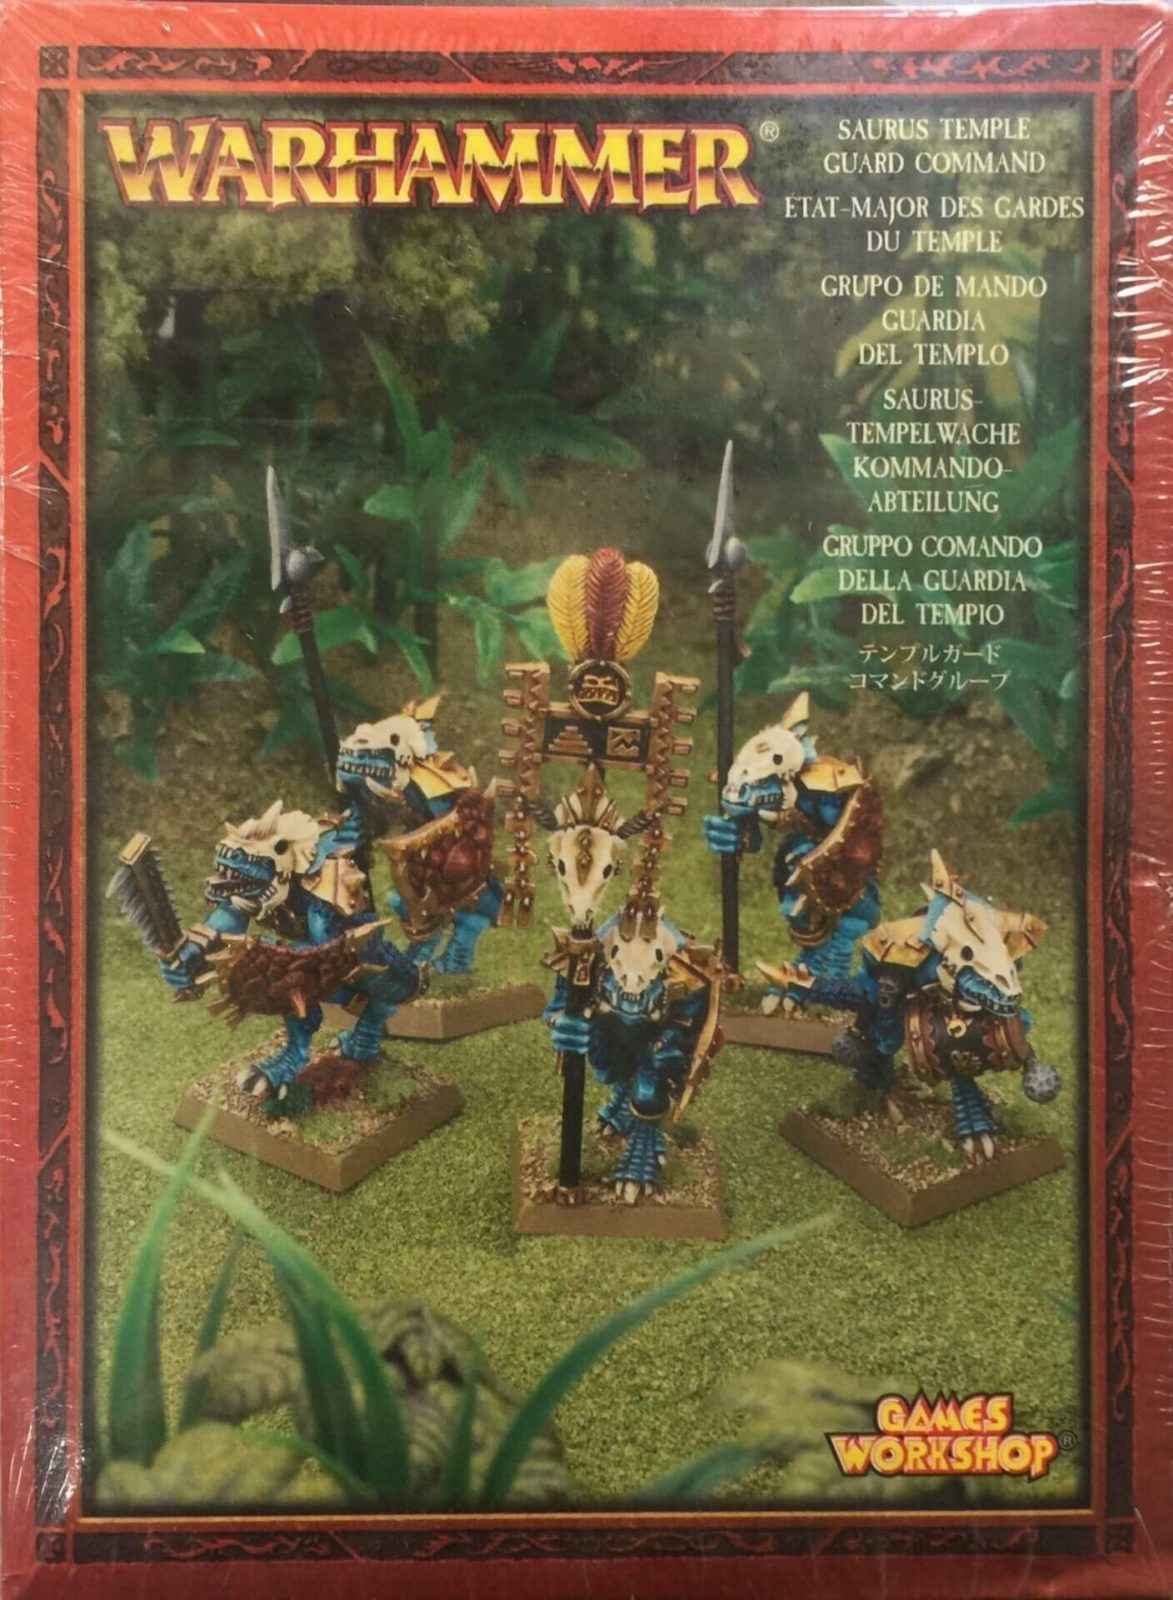 Warhammer Saurus Temple Guard Command Ref 88-16